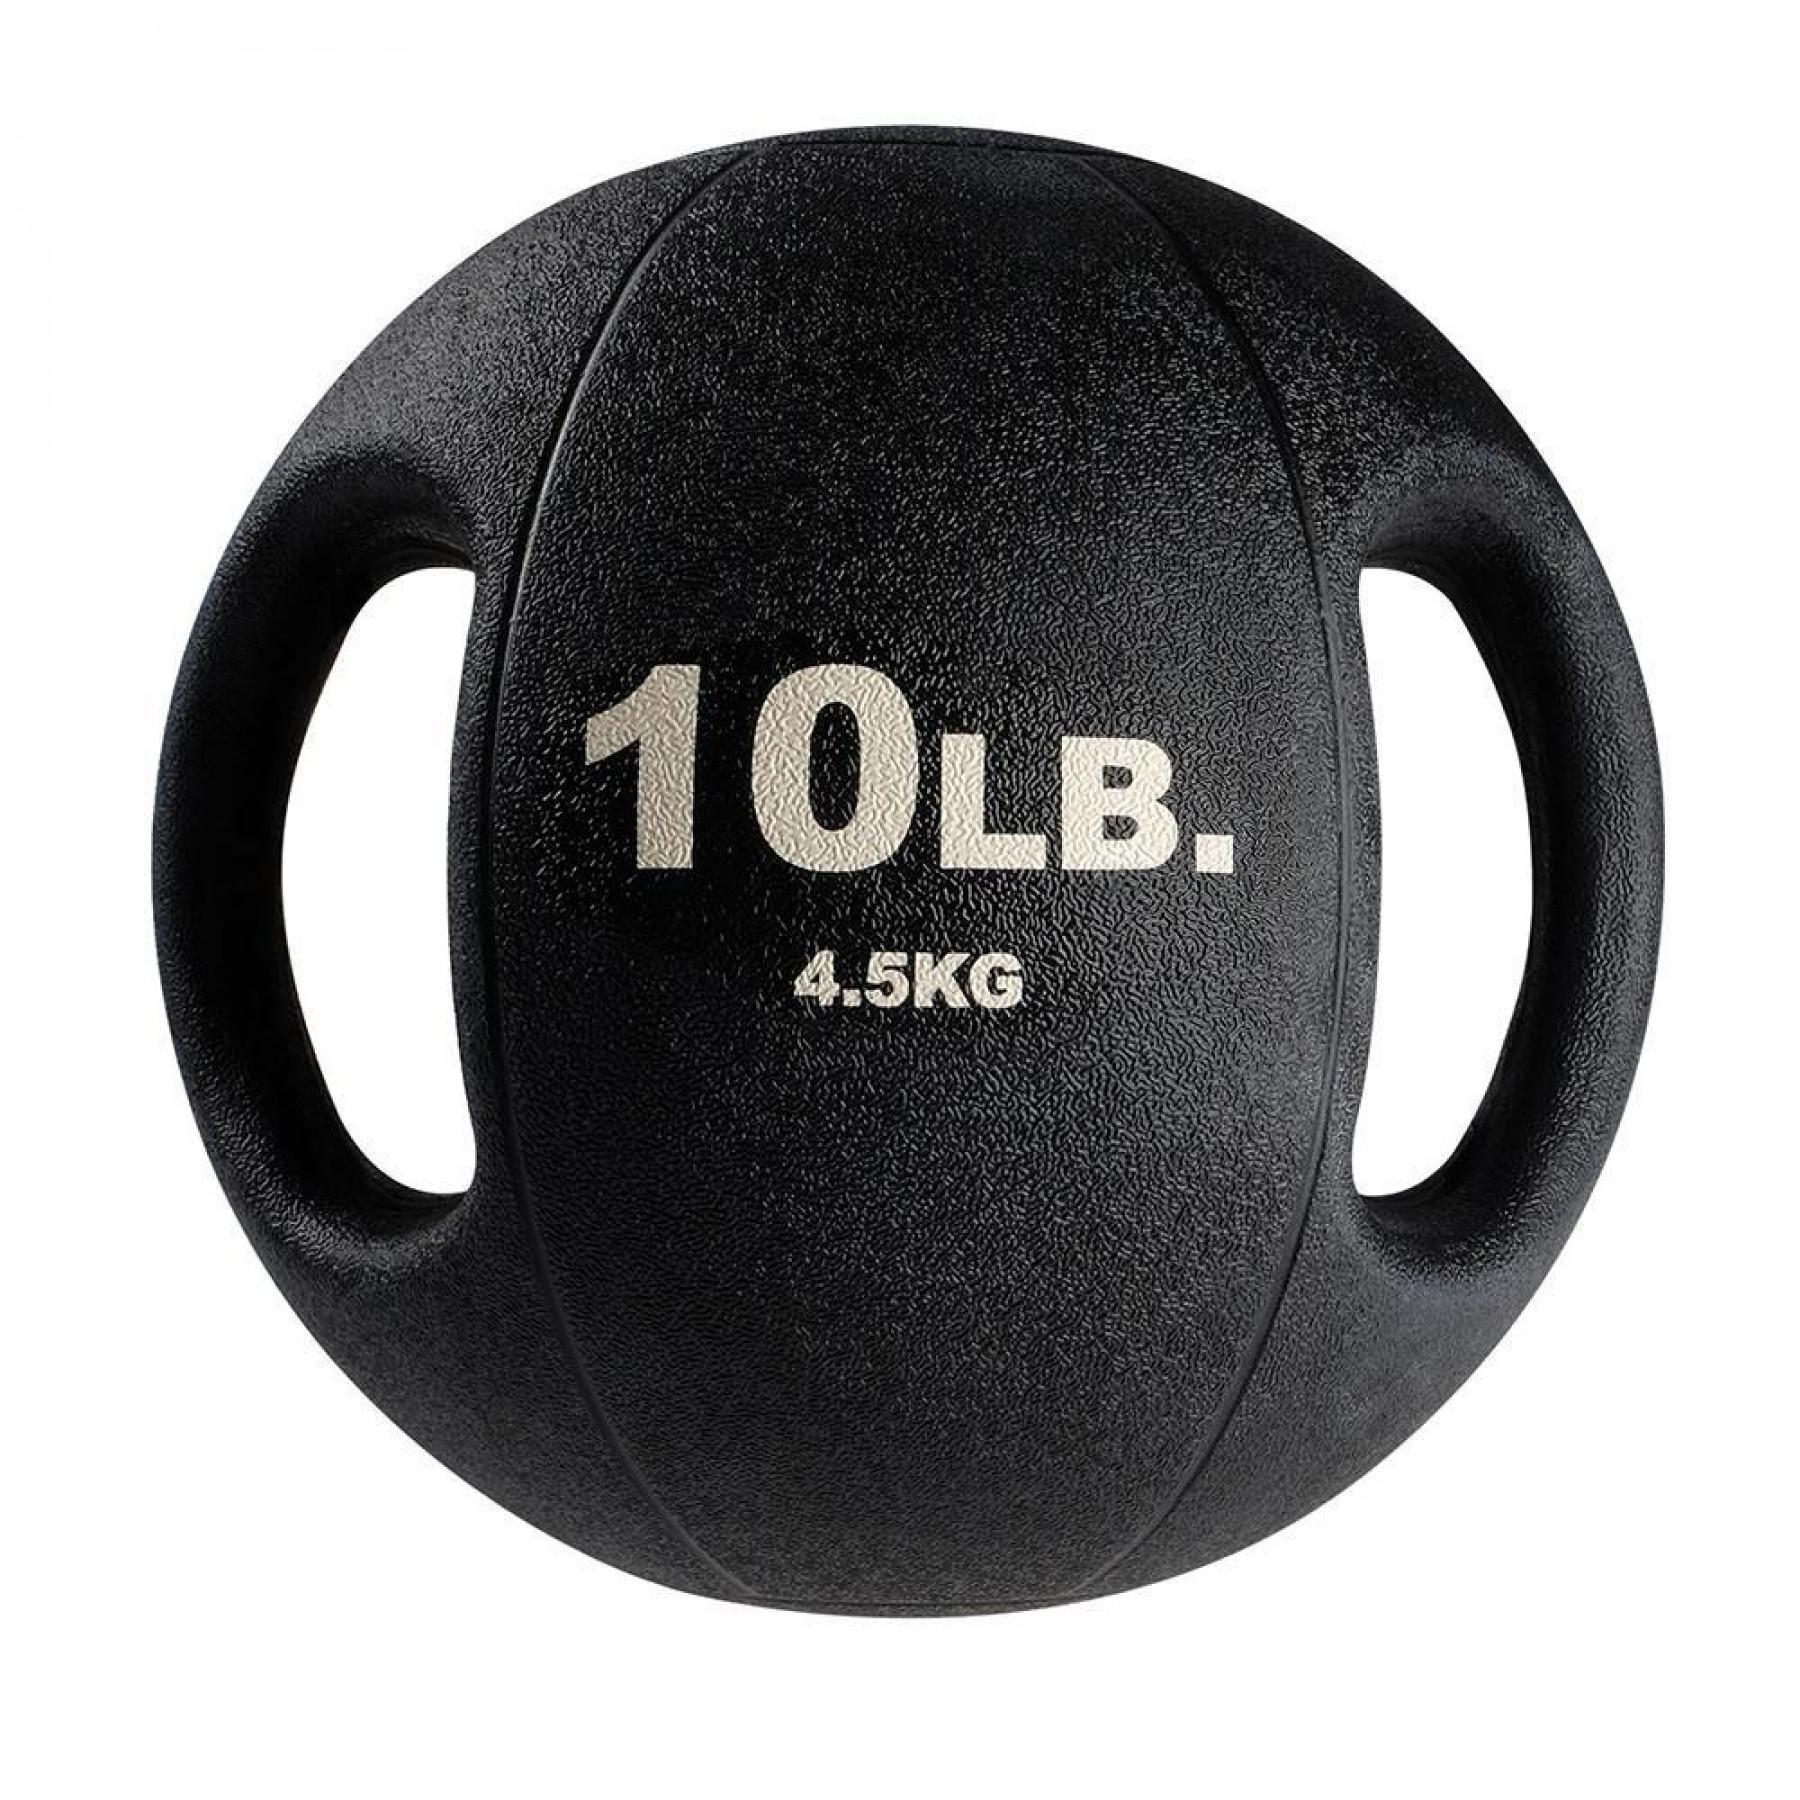 Medicine ball 2 handles 2.7 kg Body Solid